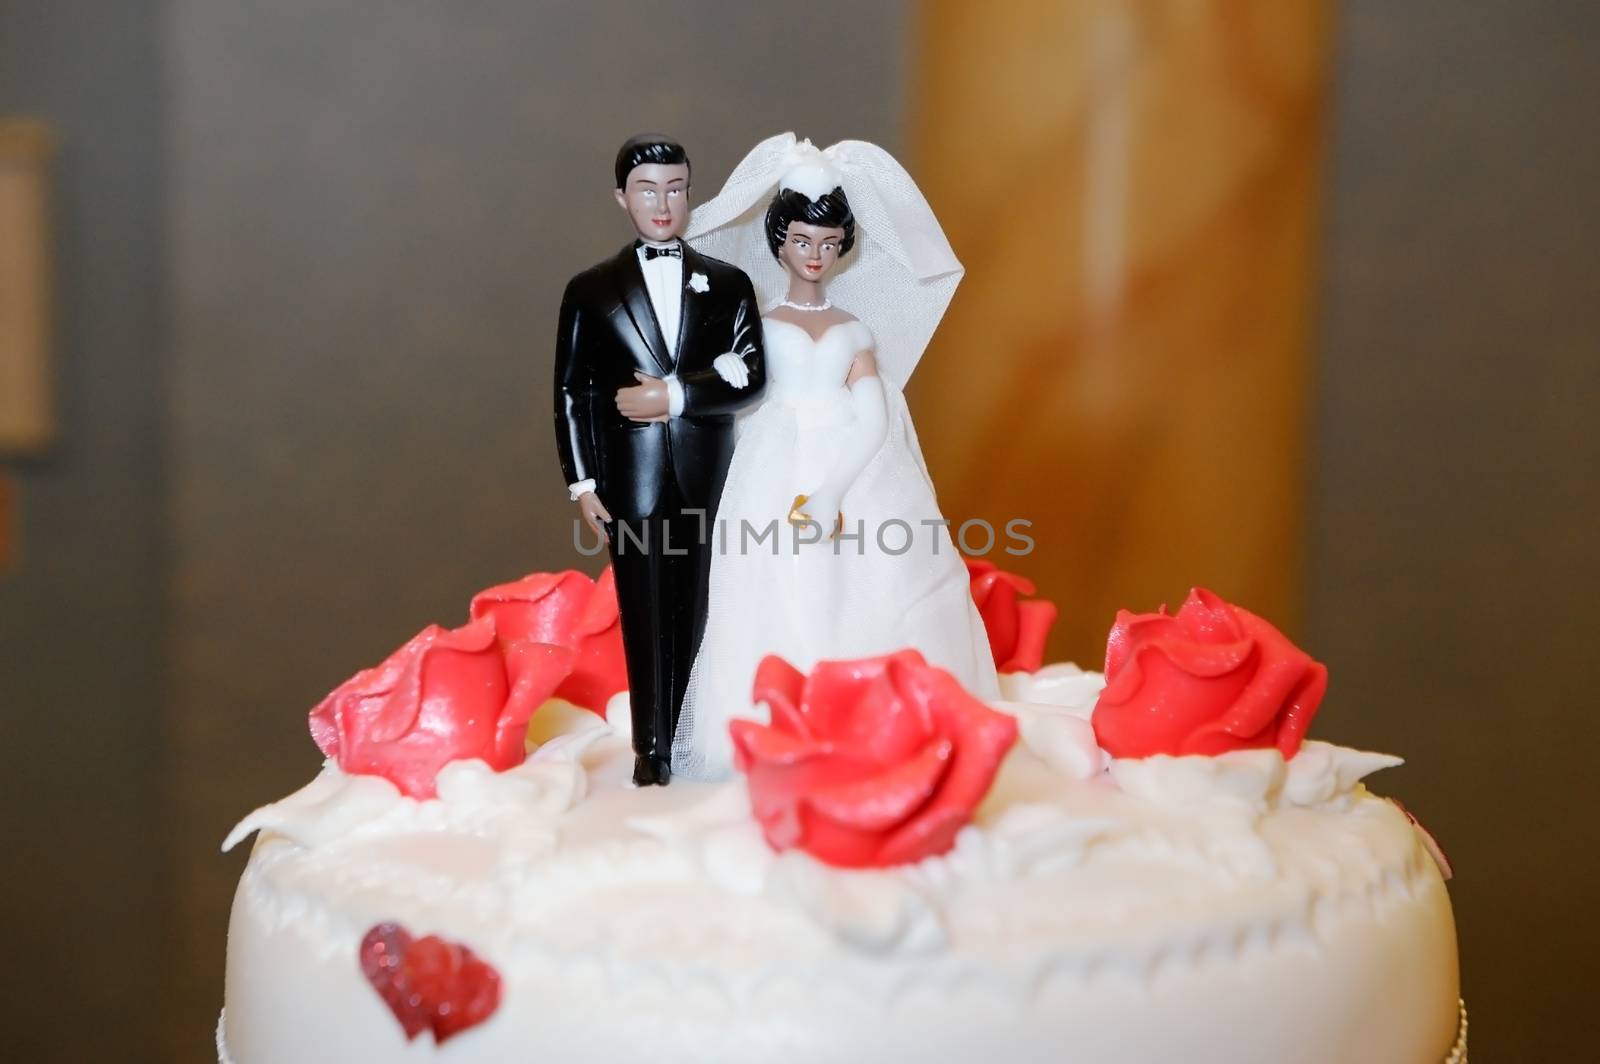 Ethnic Bride and groom decorate wedding cake